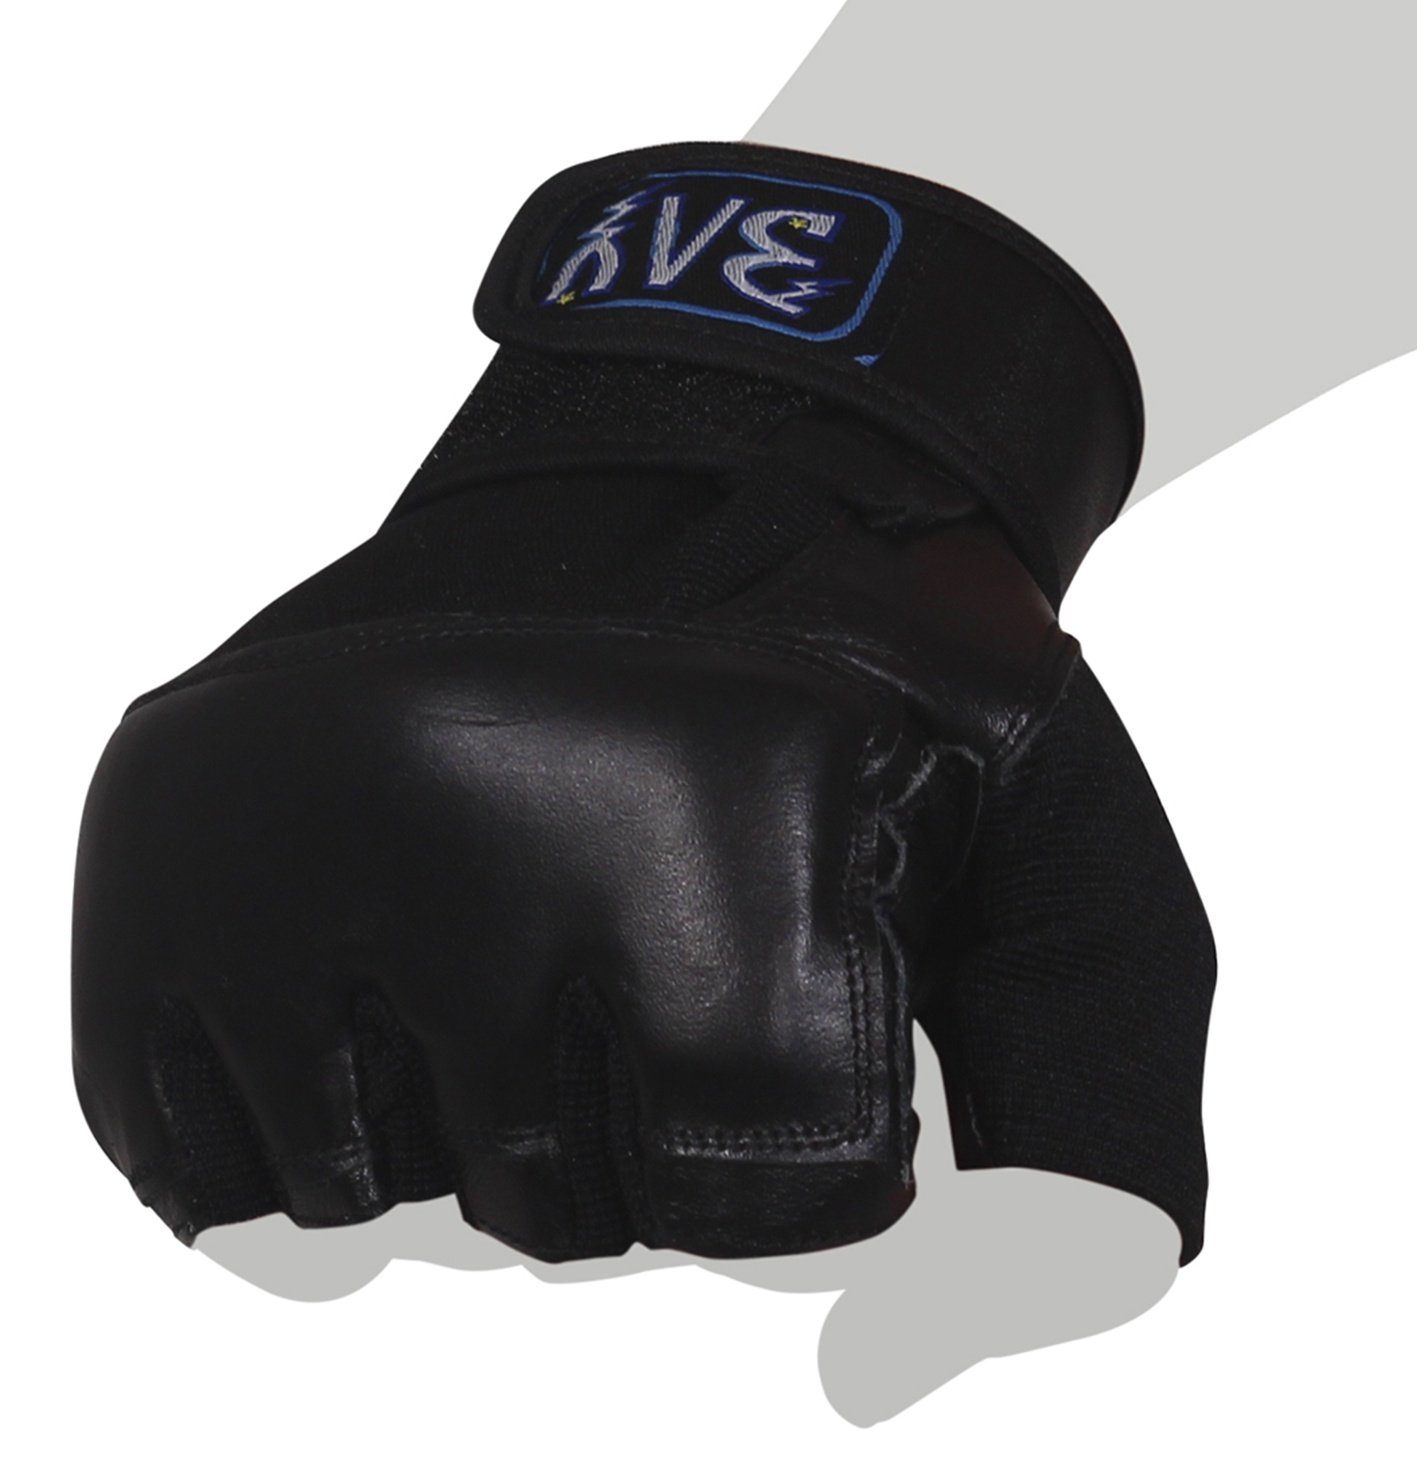 Sandsack Boxhandschuhe XL Leder, robust, - Orbit Boxsack Sandsackhandschuhe S sehr BAY-Sports schwarz, Handschutz